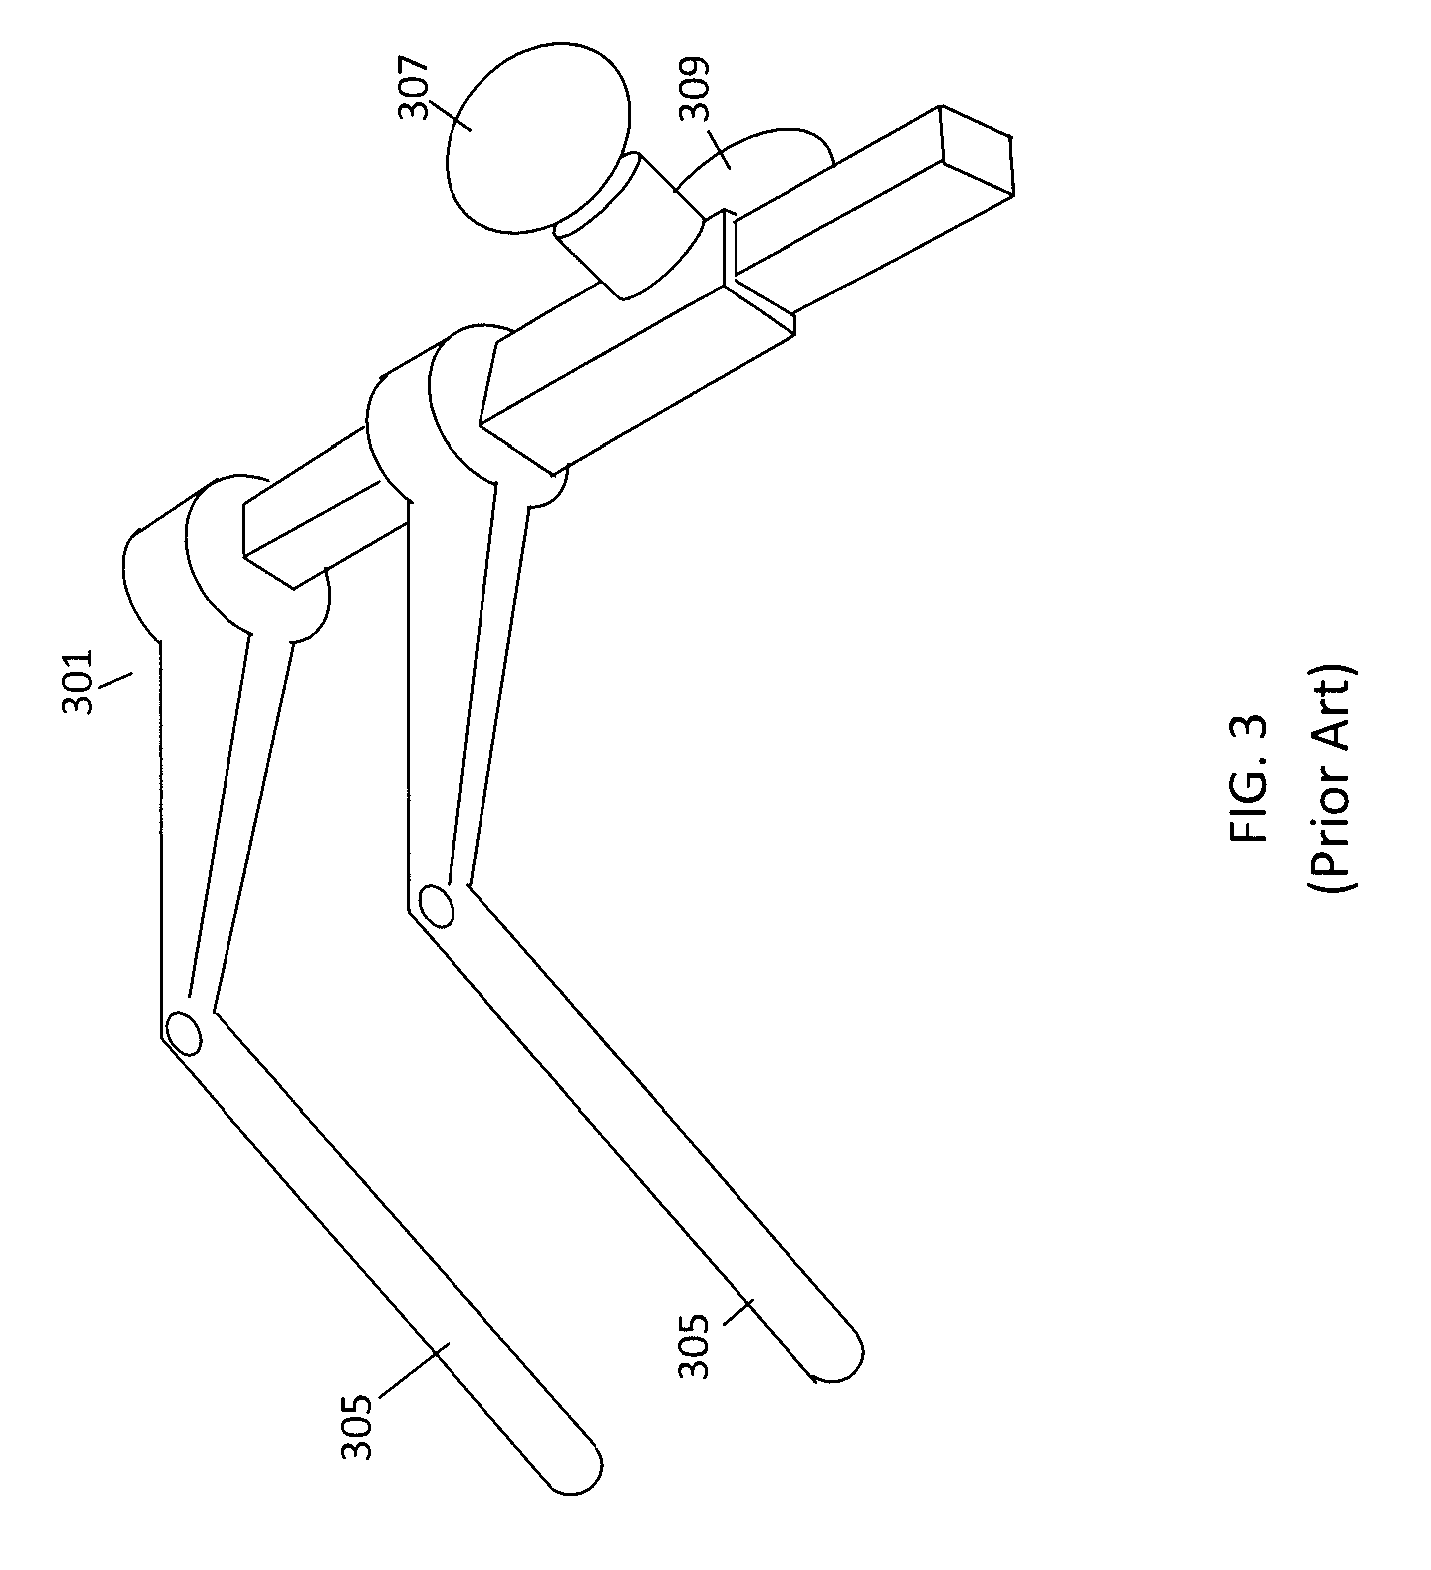 Casper pin apparatus and method of use